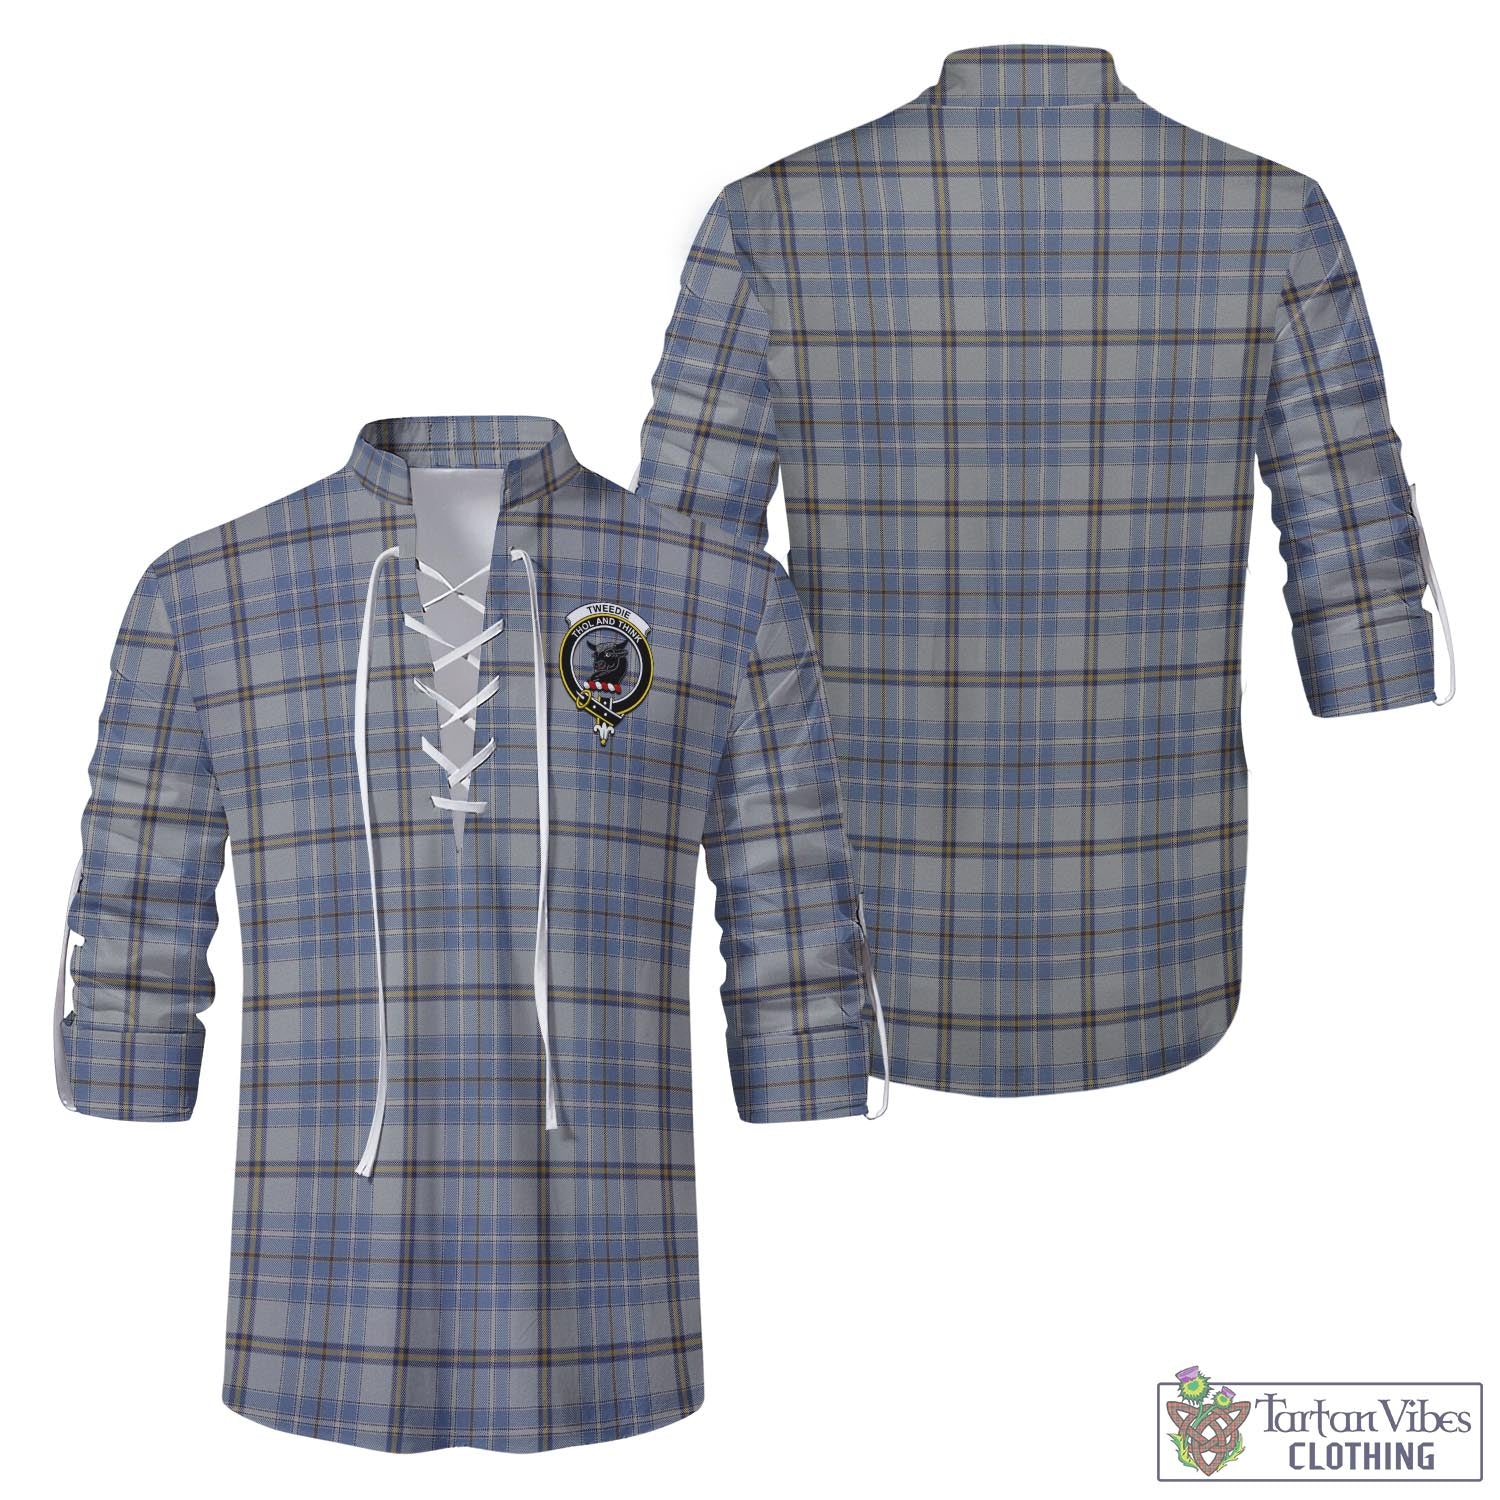 Tartan Vibes Clothing Tweedie Tartan Men's Scottish Traditional Jacobite Ghillie Kilt Shirt with Family Crest